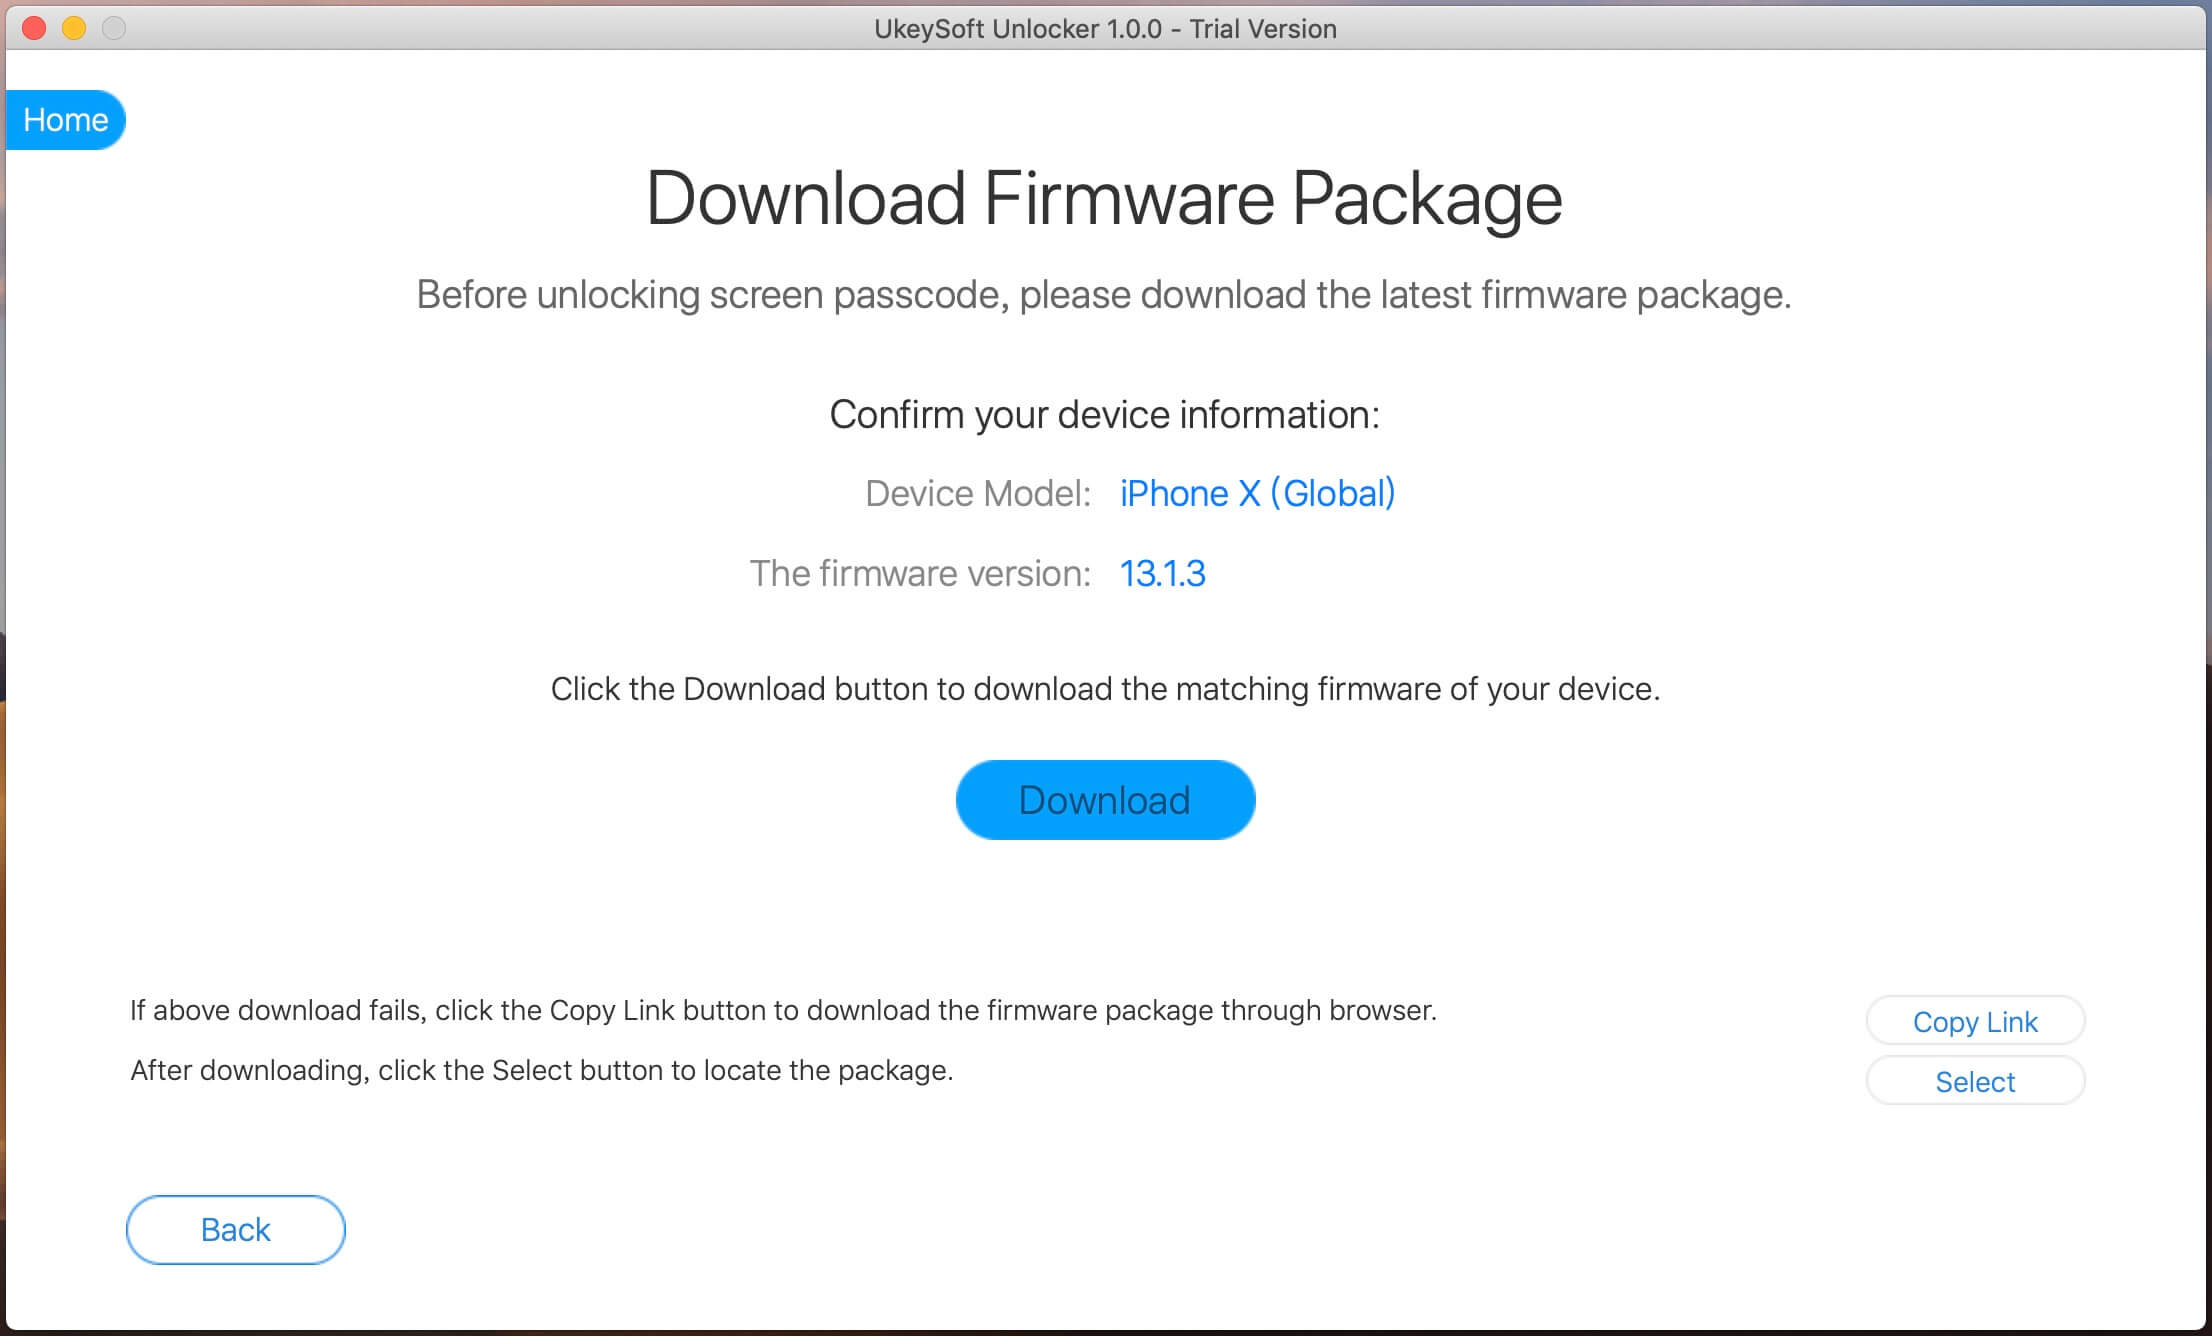 start downloading firmware package